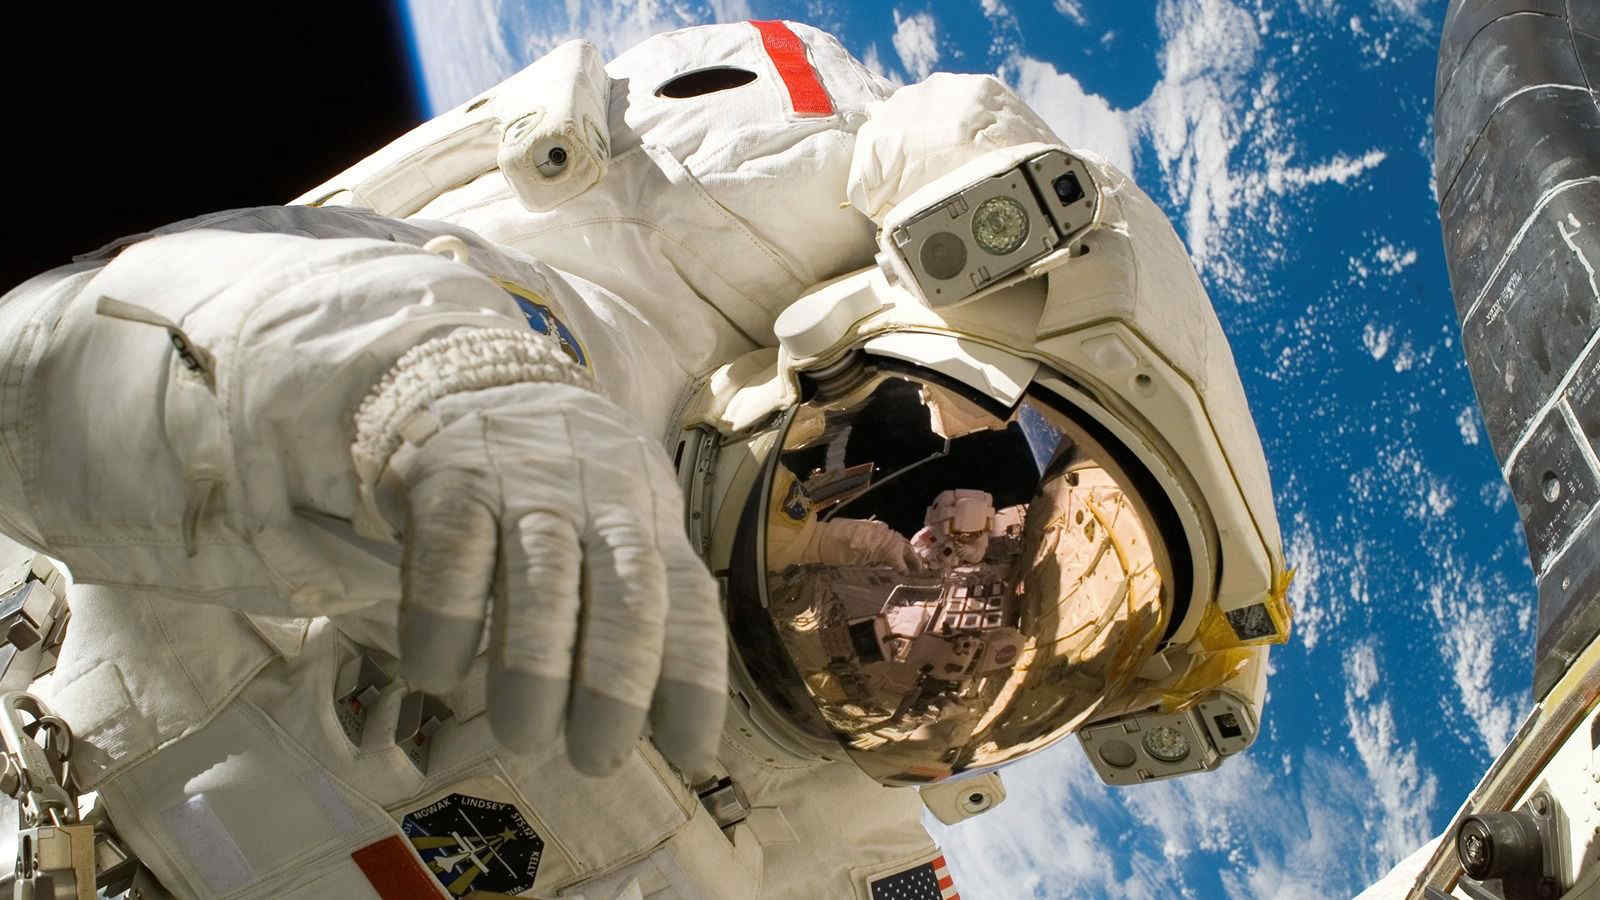 Esa, selezionati i nuovi astronauti europei: tra le 11 "riserve" ci sono due italiani